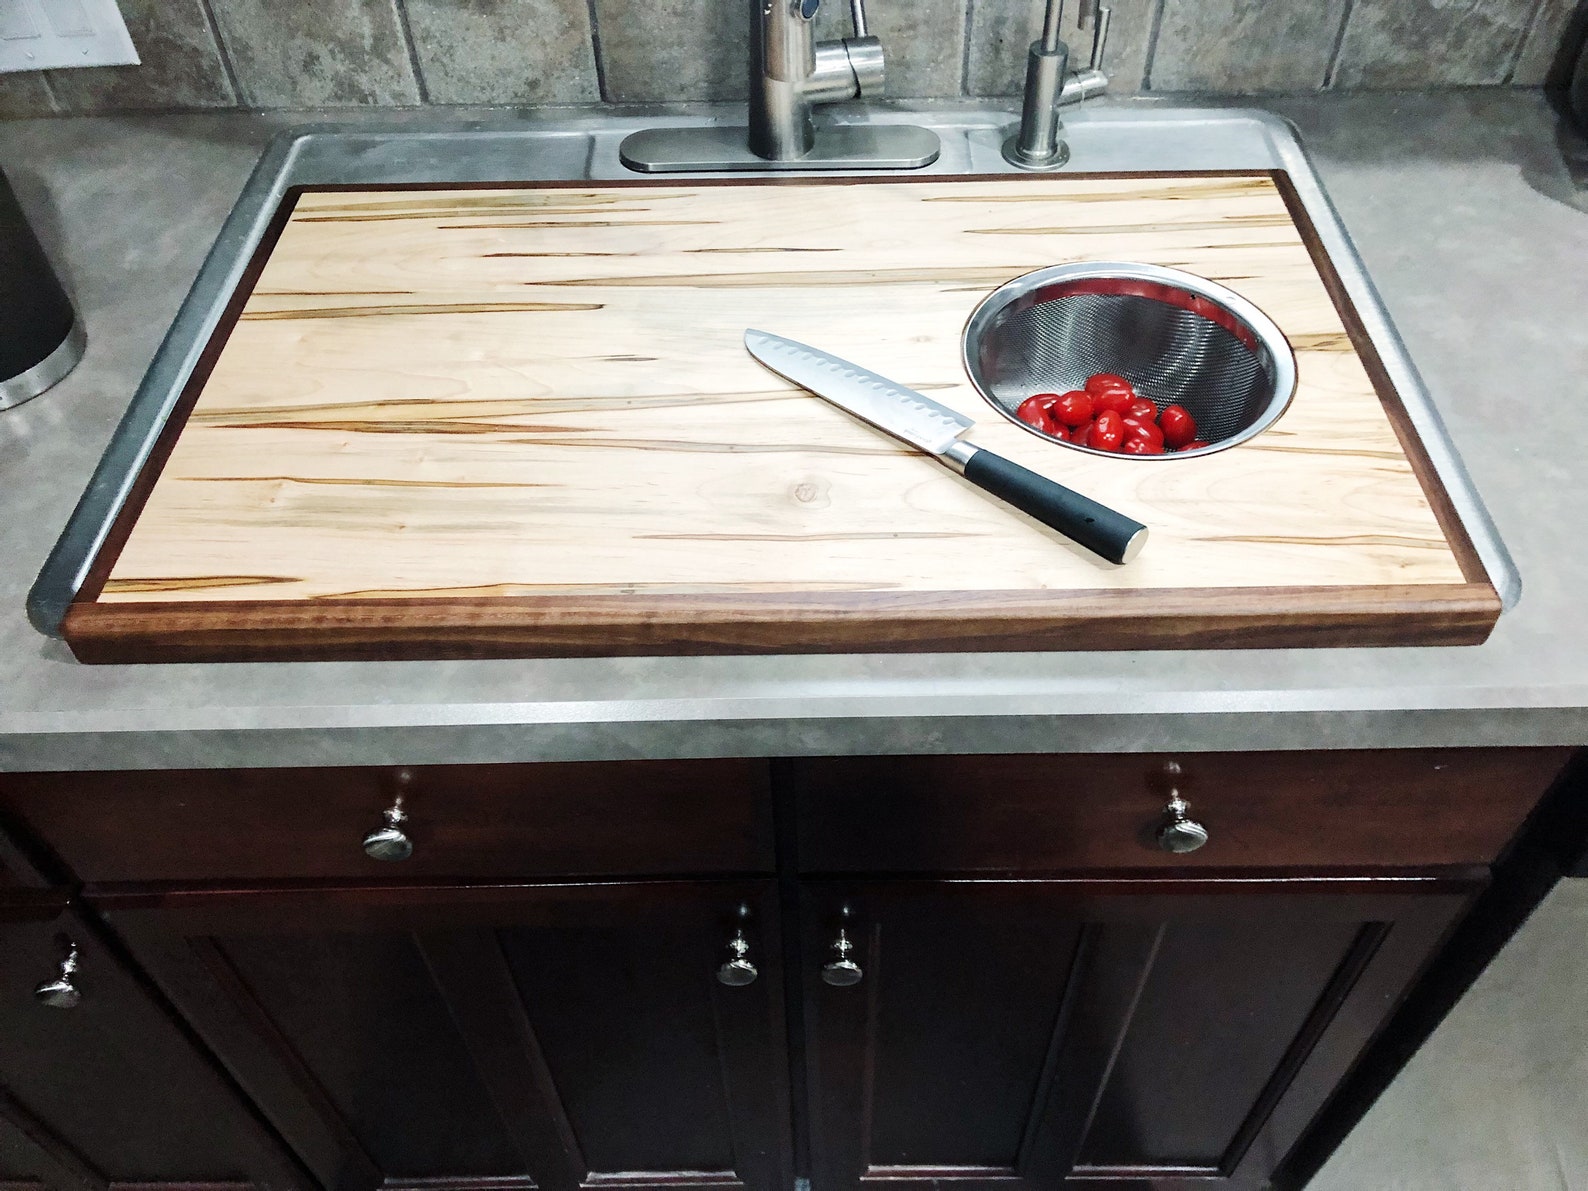 cutting board that fits kitchen sink